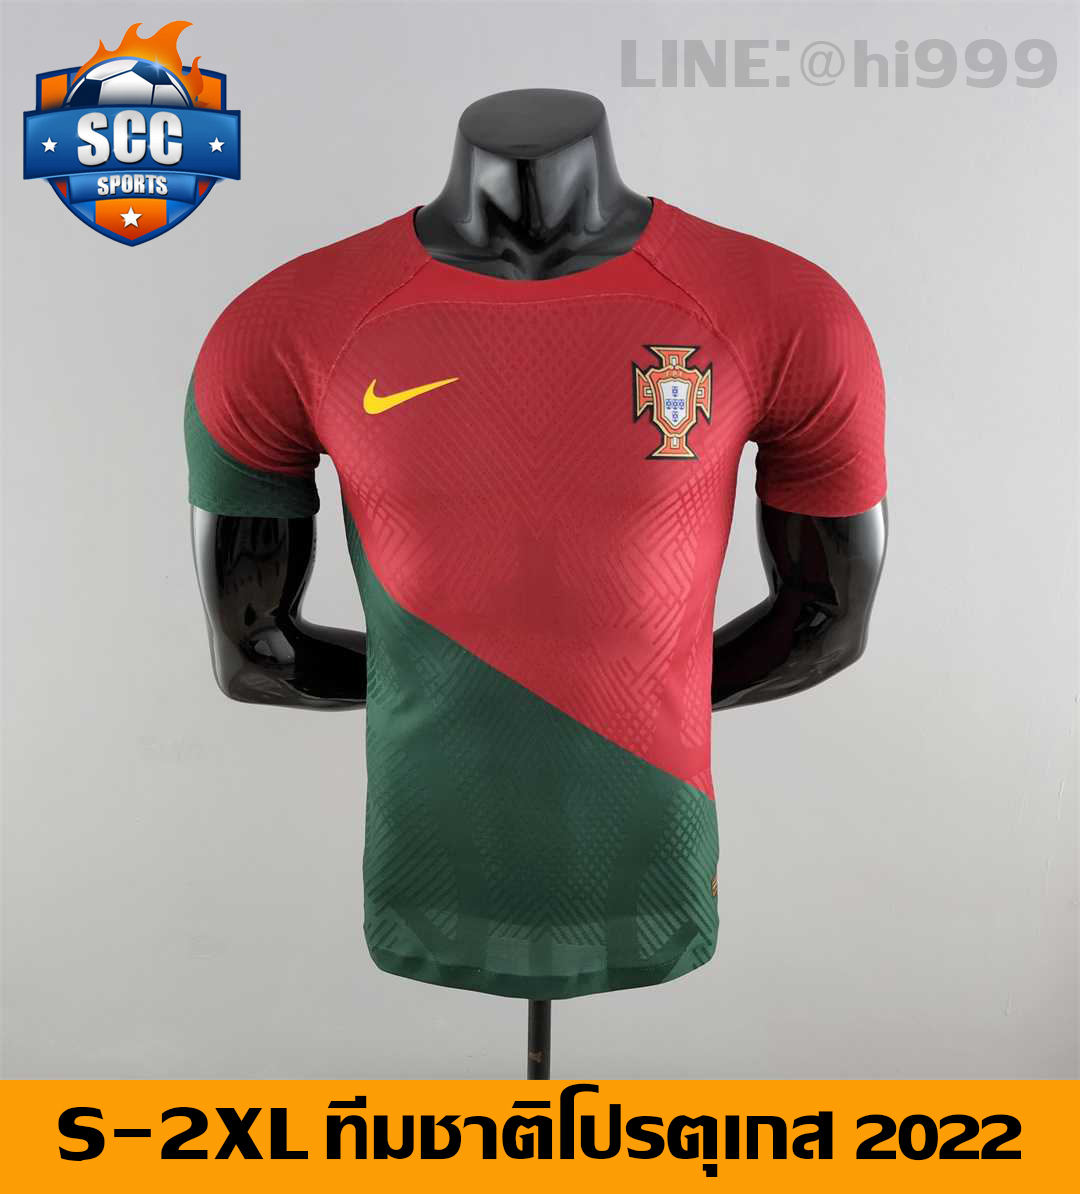 Images/Blog/Q9mwvZvK-เสื้อบอล ทีมชาติโปรตุเกส 2022 Player - SCC SPORTS.jpg